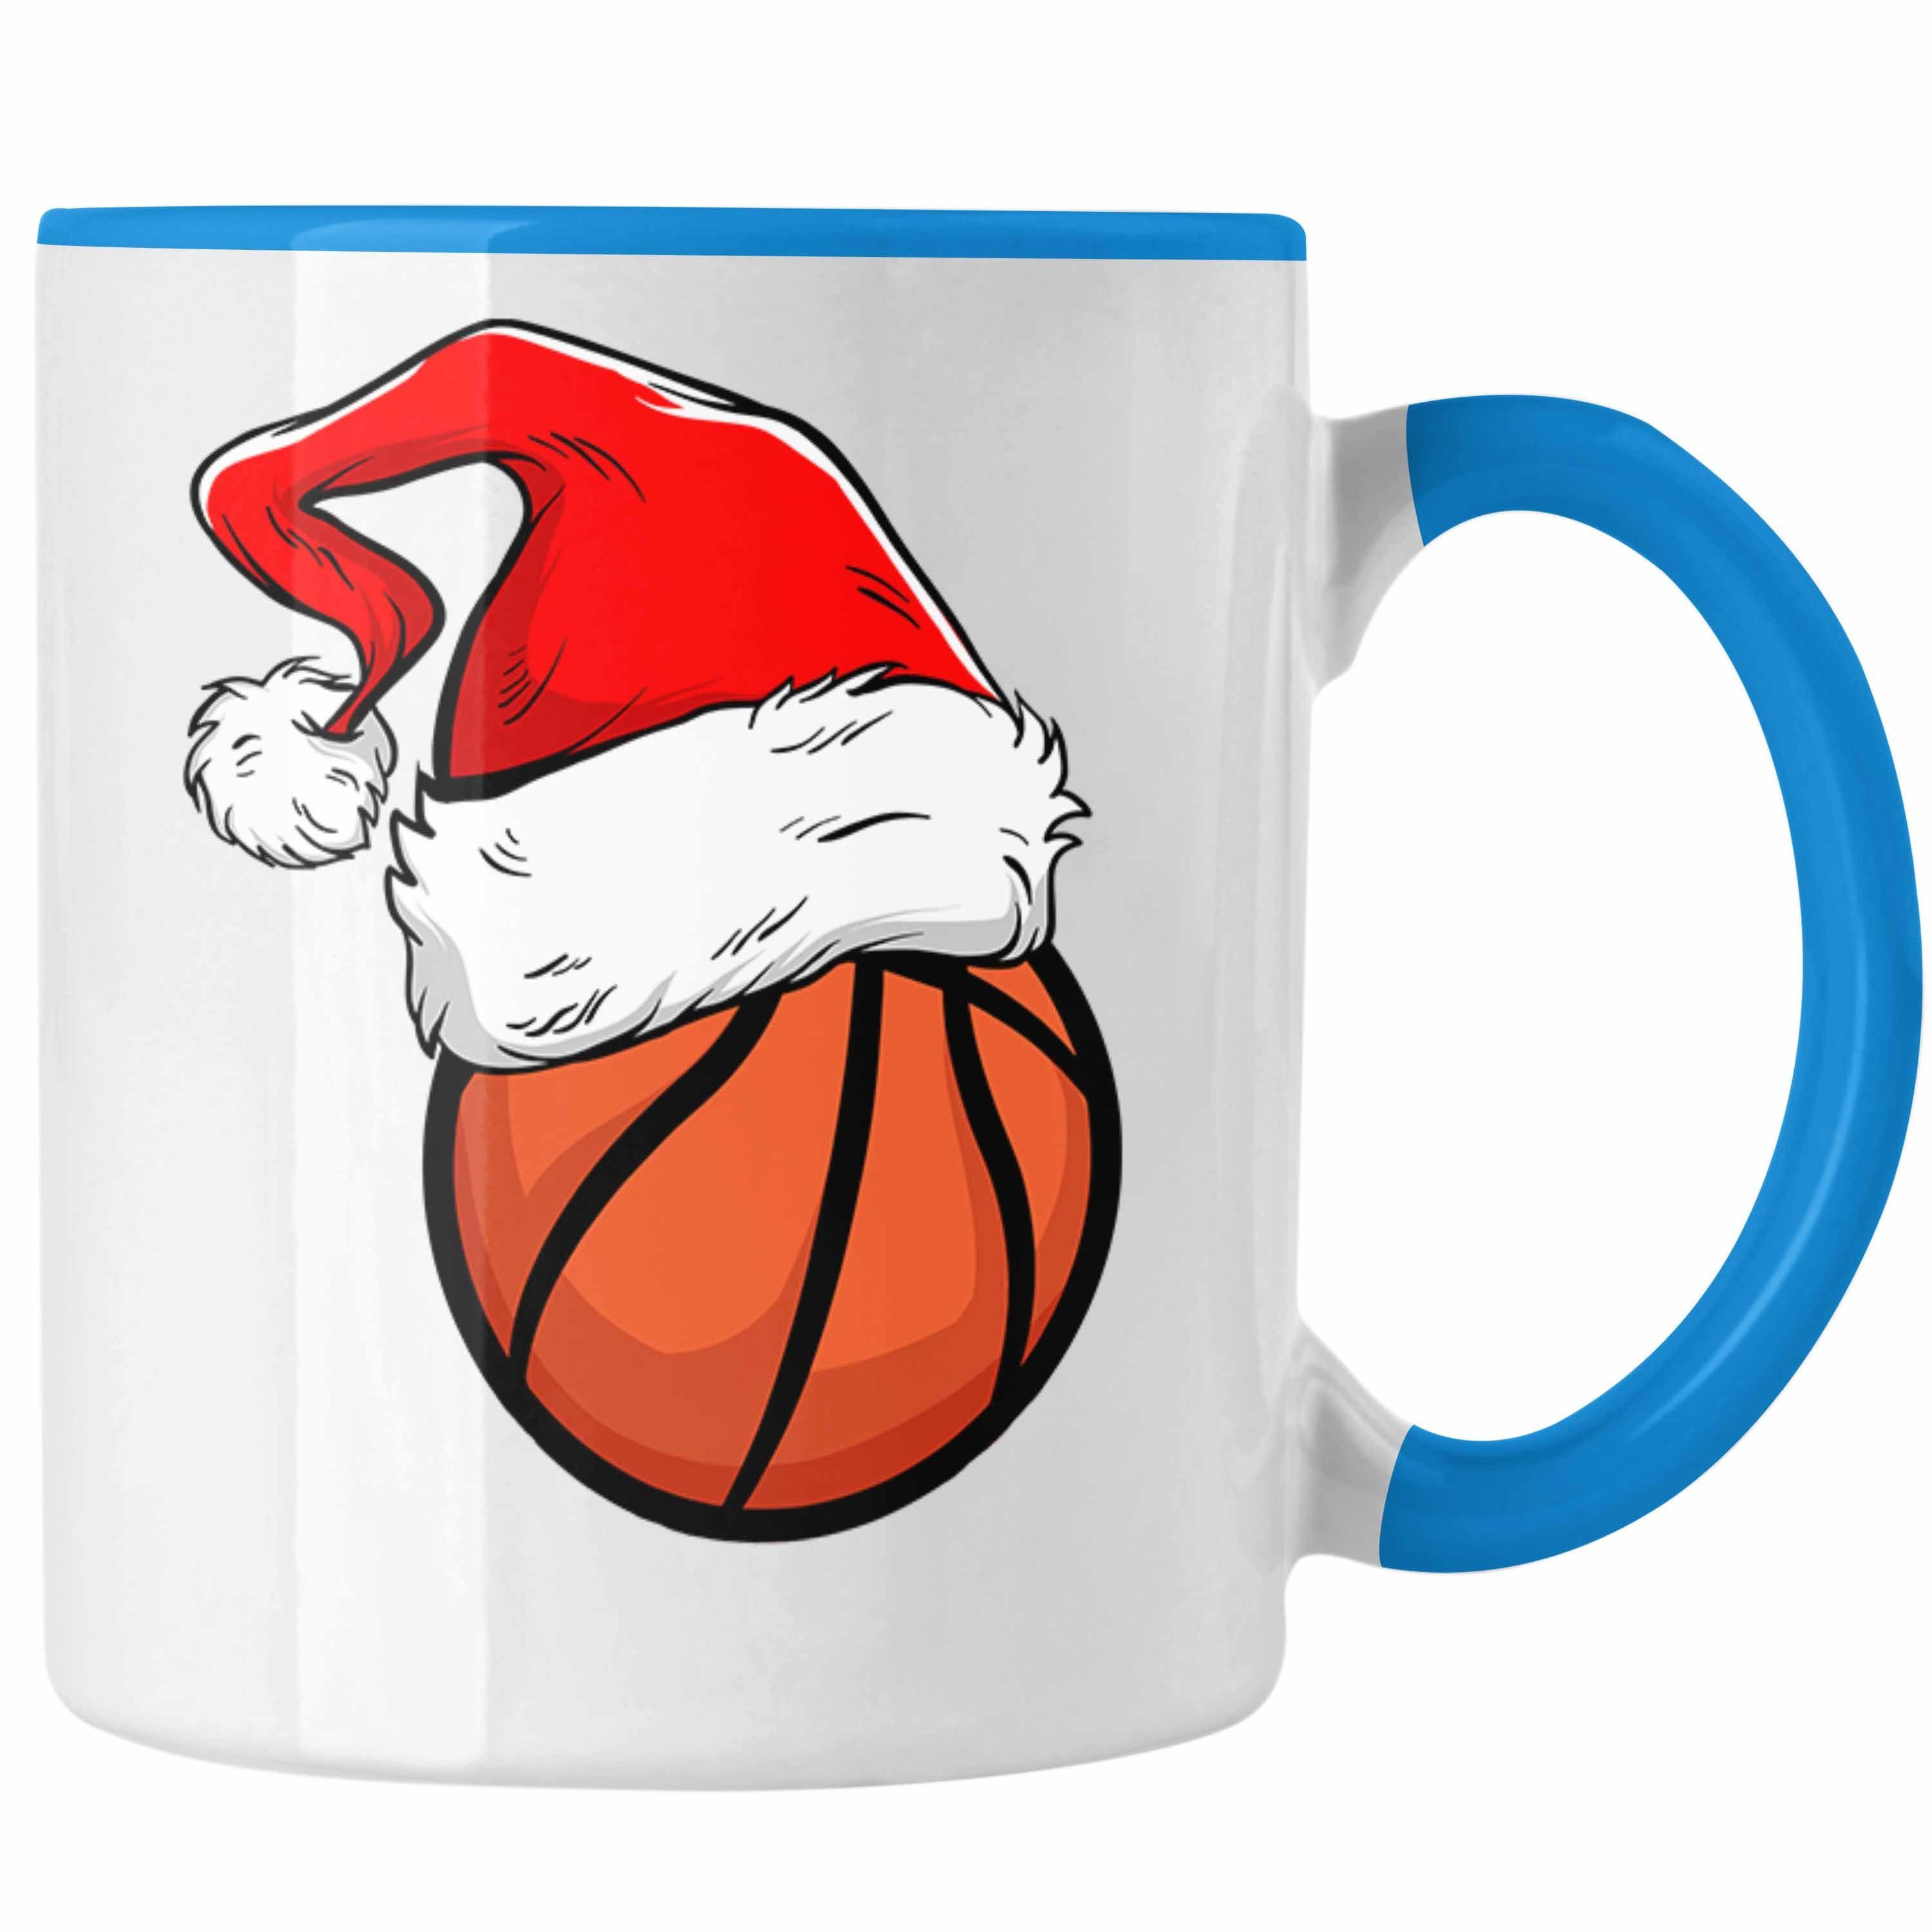 Trendation Tasse Trendation - Basketball Weihnachten Tasse Geschenk Basketballspieler Geschenkidee Blau